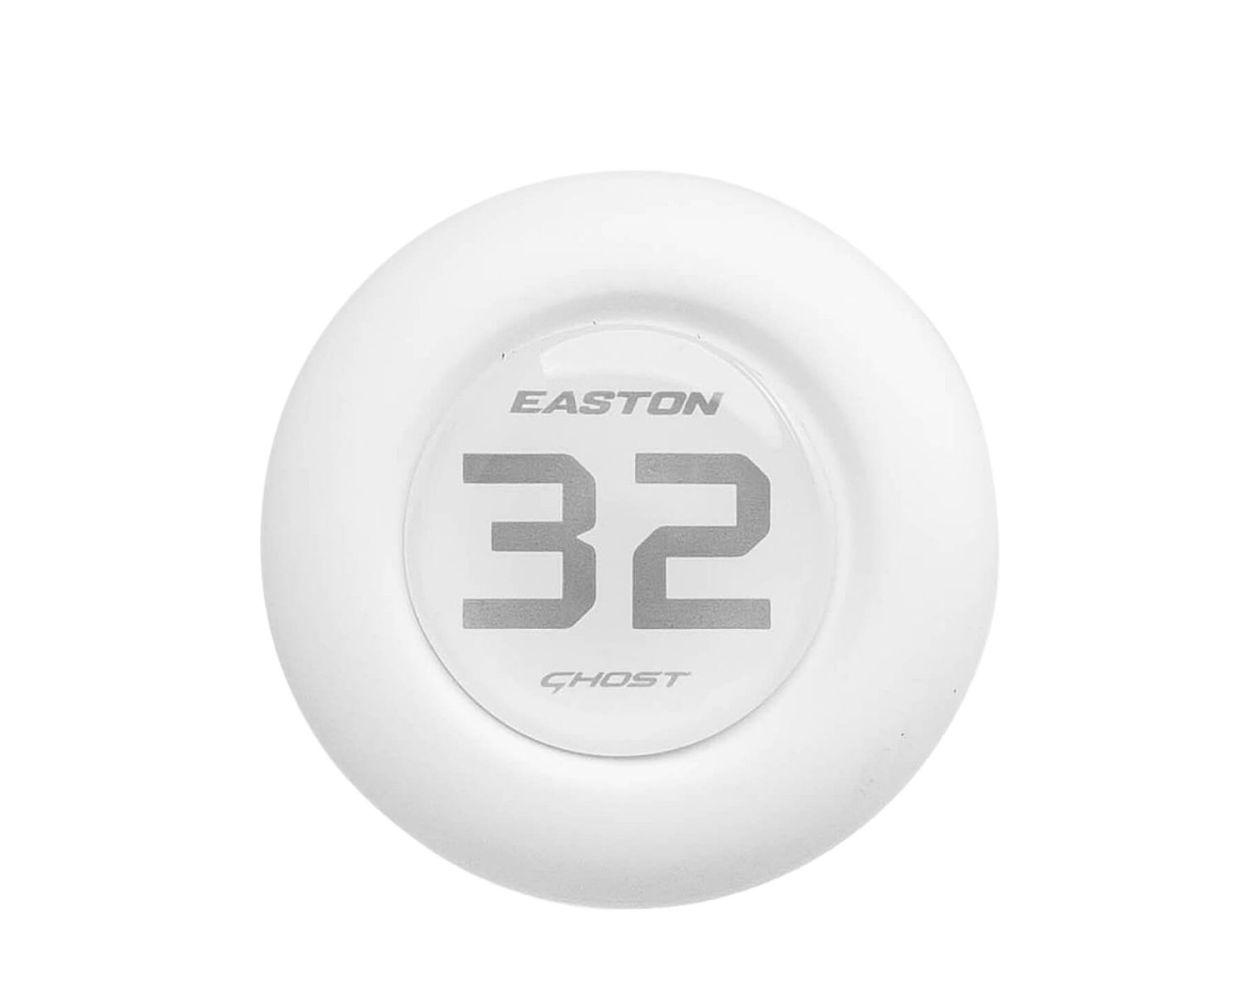 2023 Easton Ghost Double Barrel -10 Fastpitch Softball Bat